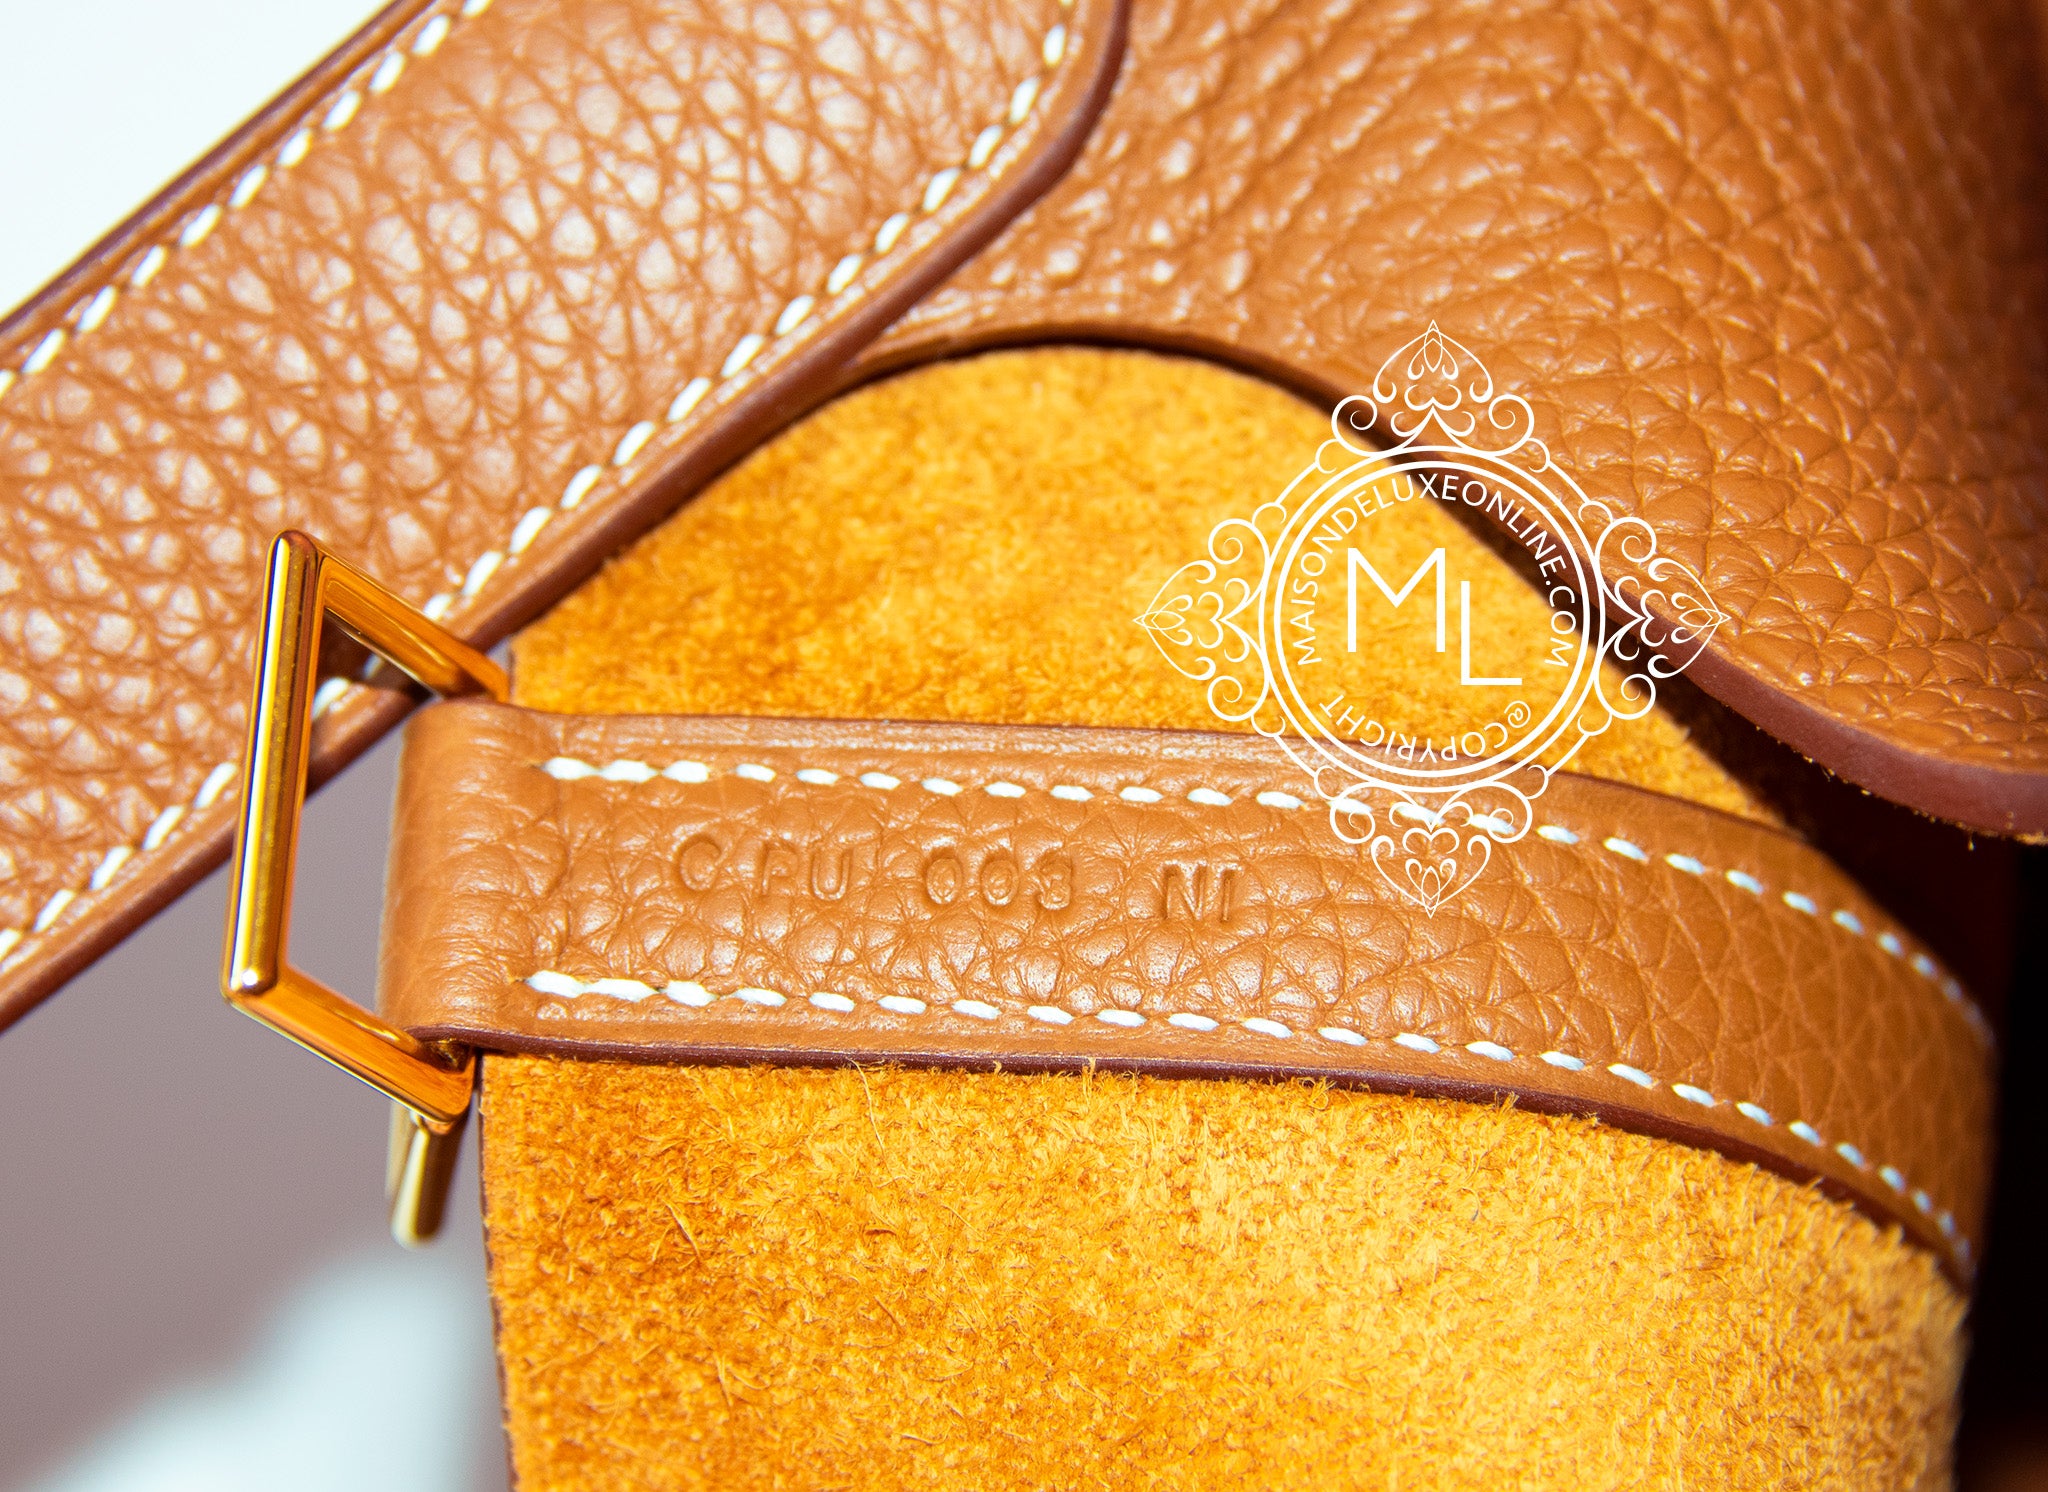 Authenticated Hermes Clemence Picotin 22 Orange Calf Leather Handbag